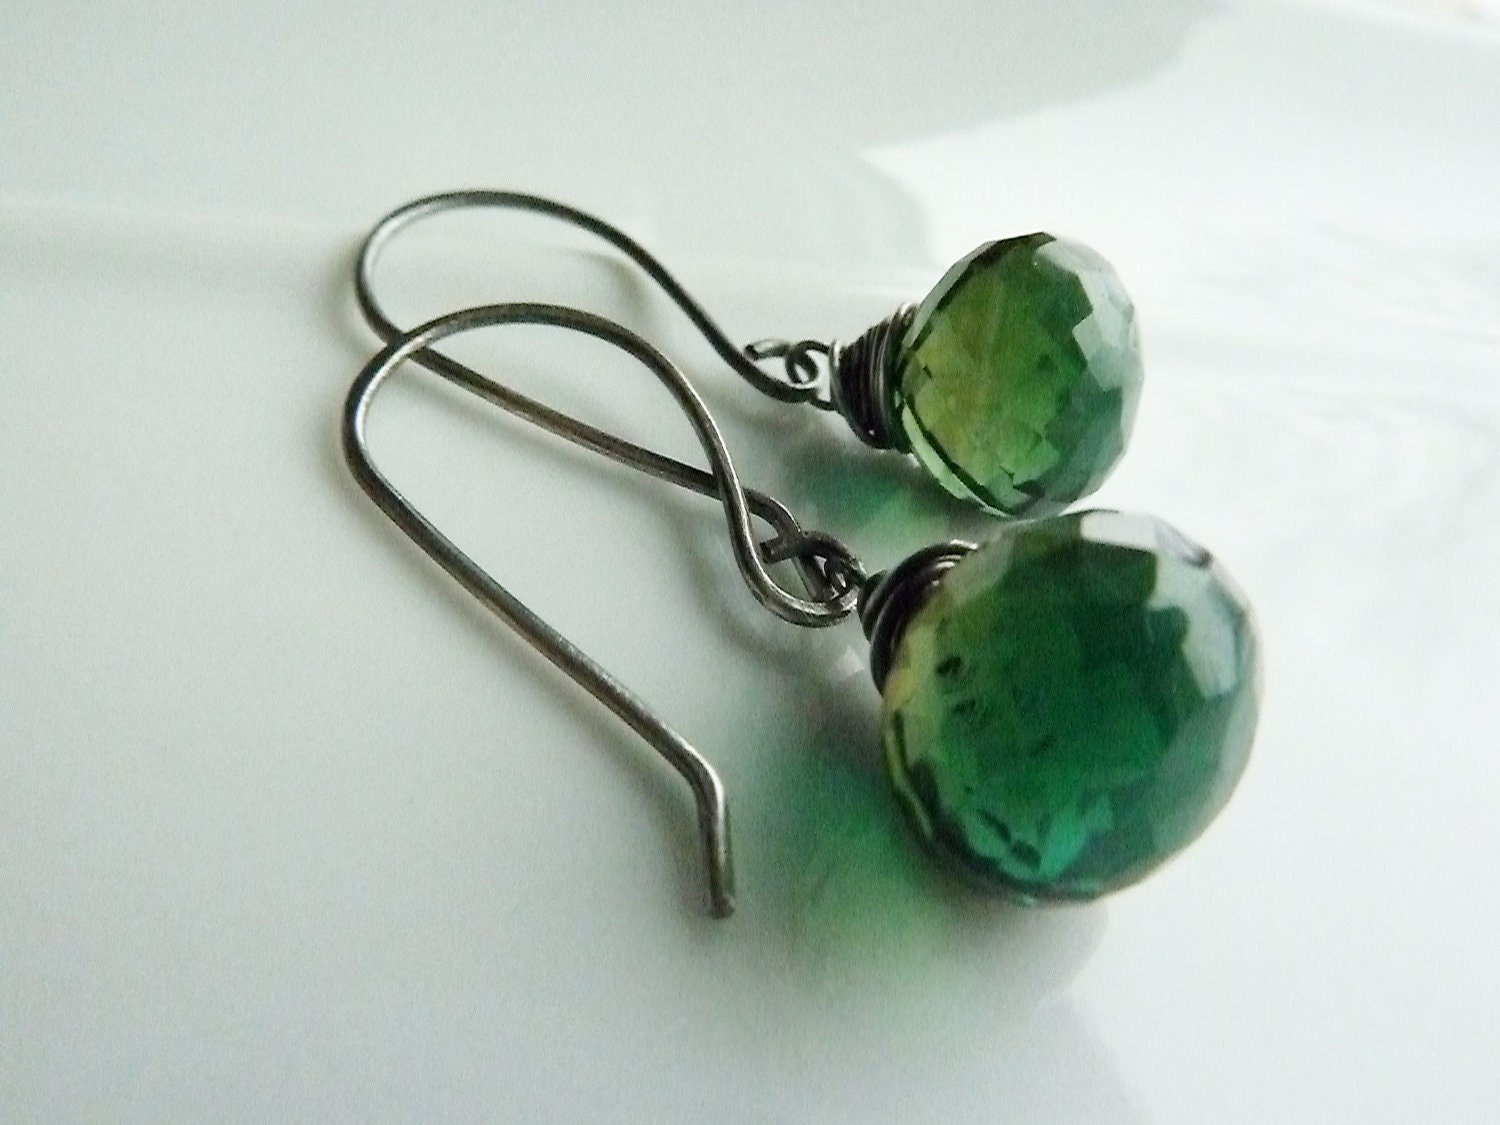 Emerald Green Quartz Onion Briolette and Oxidized Sterling Silver Earrings - PreciousDrops